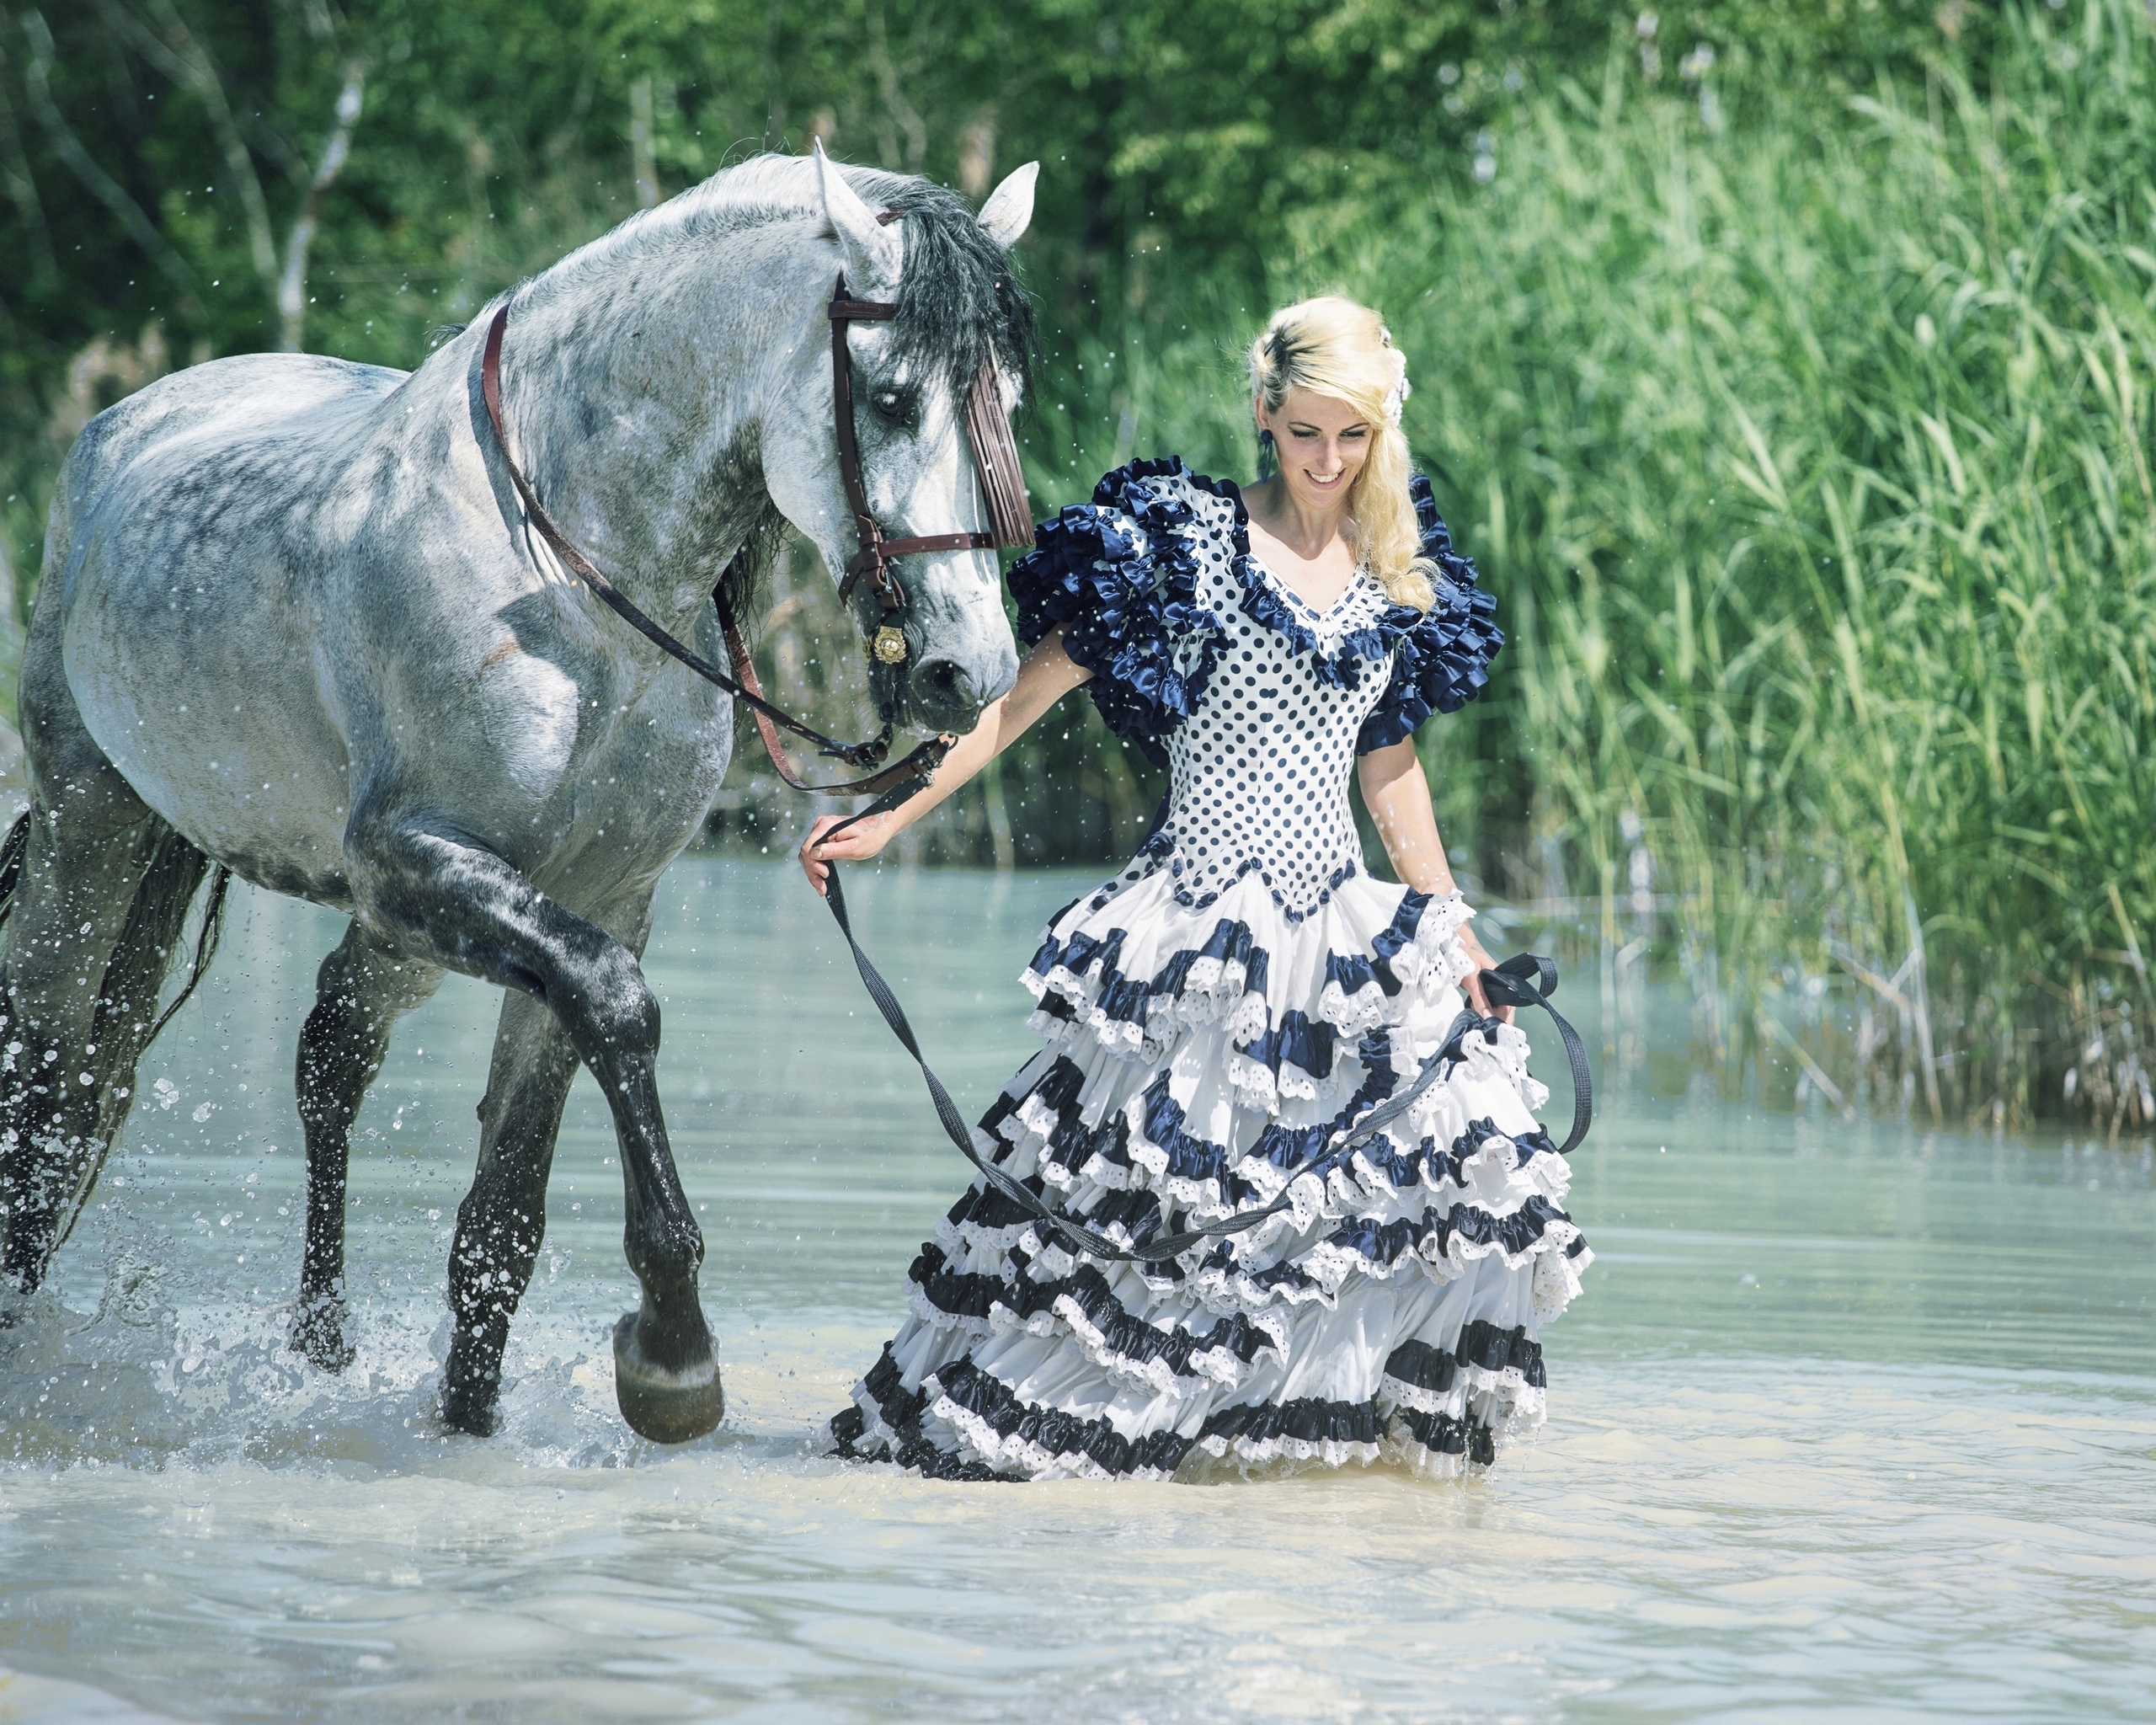 Image: Girl, horse, water, river, walk, grass, dress, sunny day